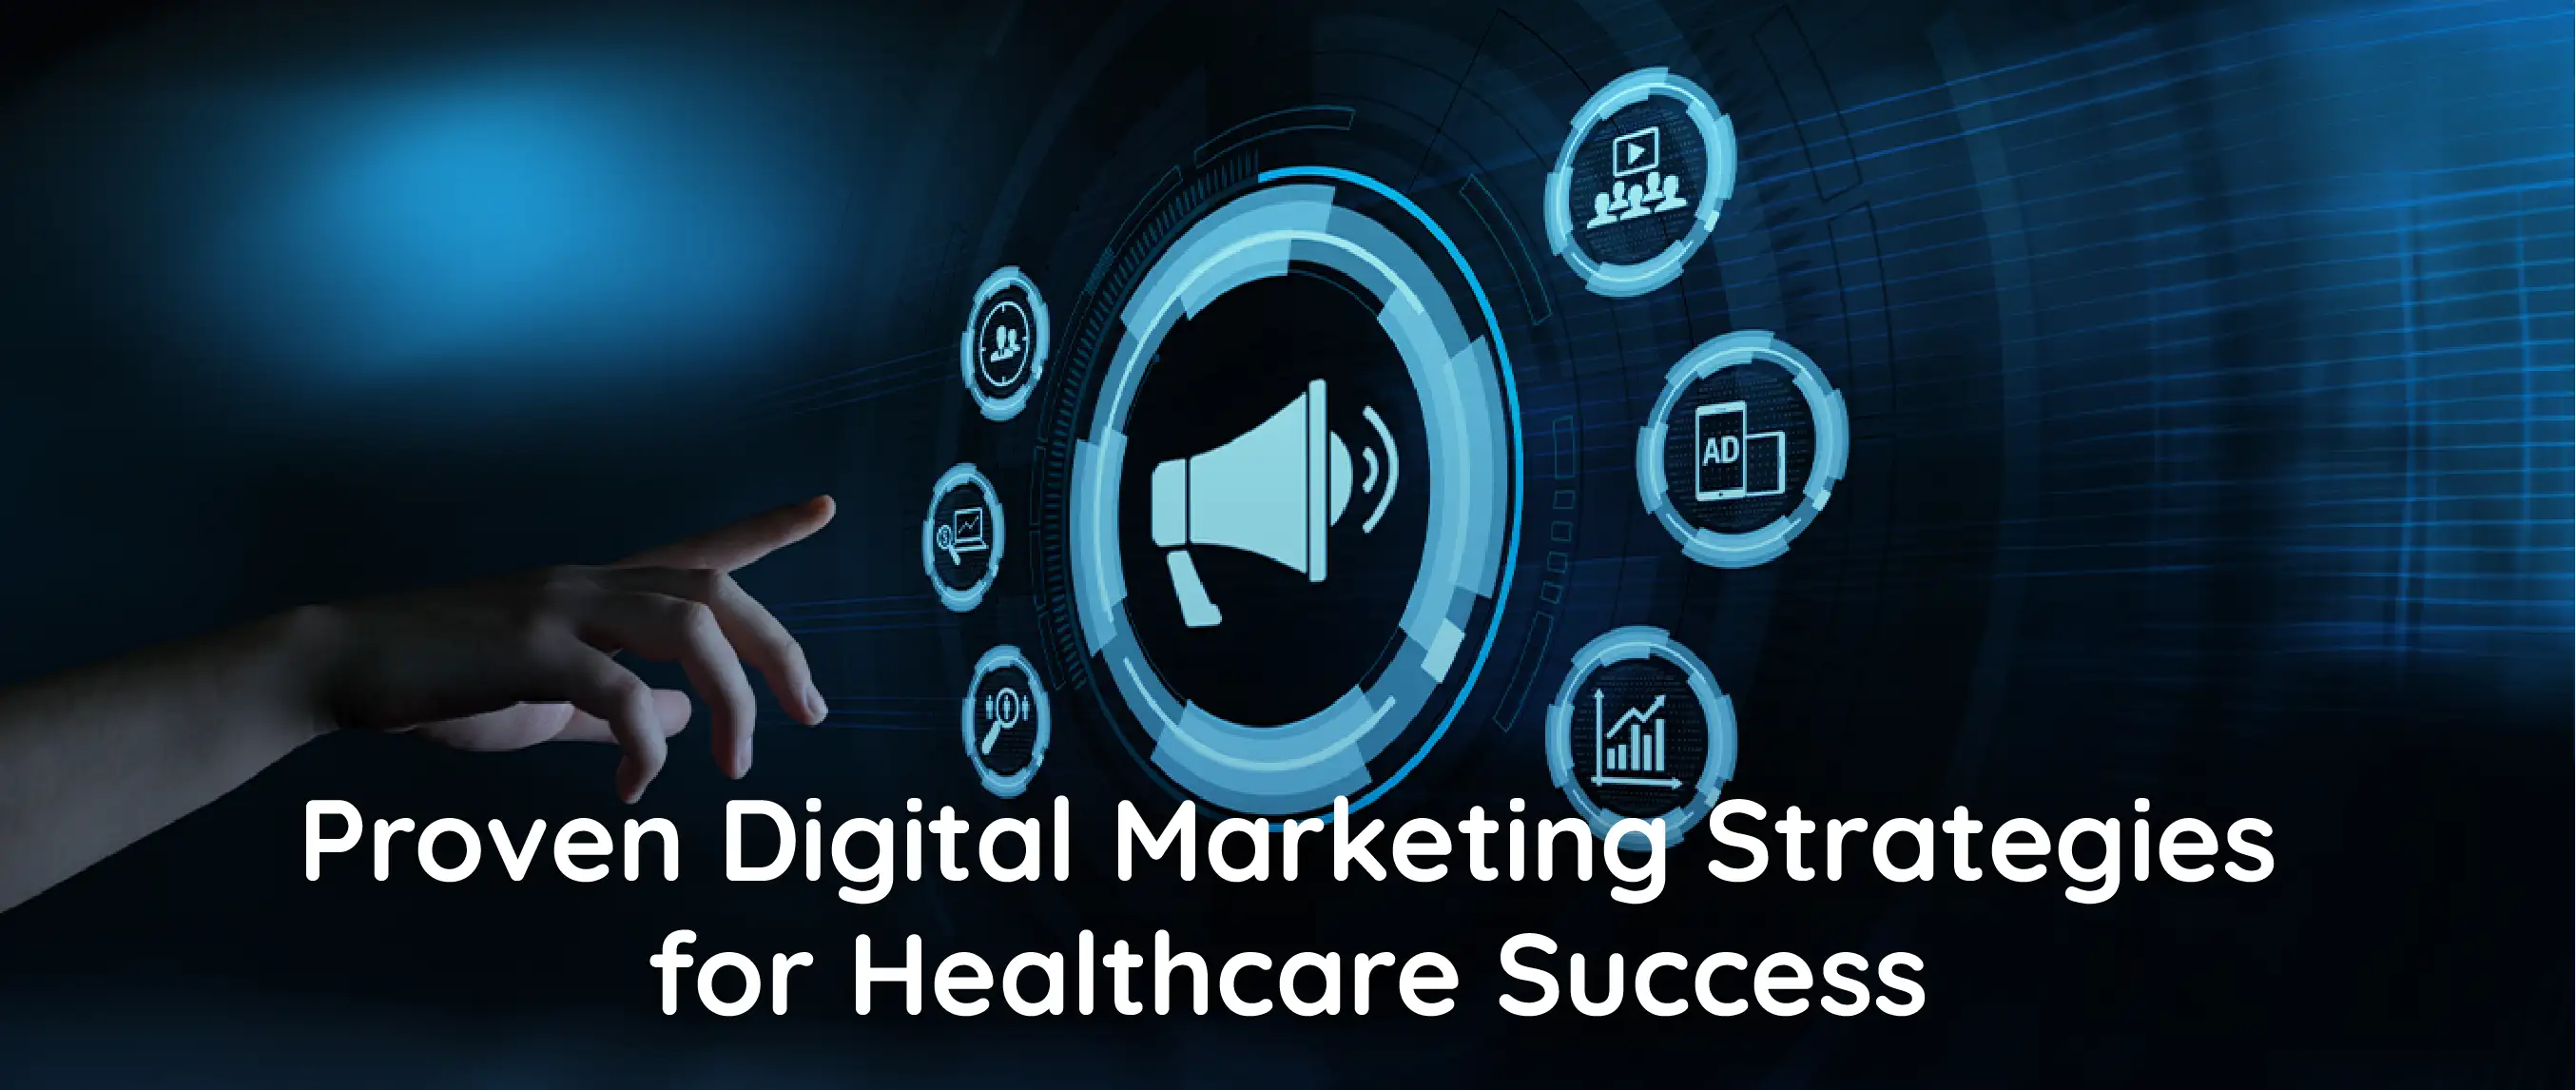 Proven Digital Marketing Strategies for Healthcare Success